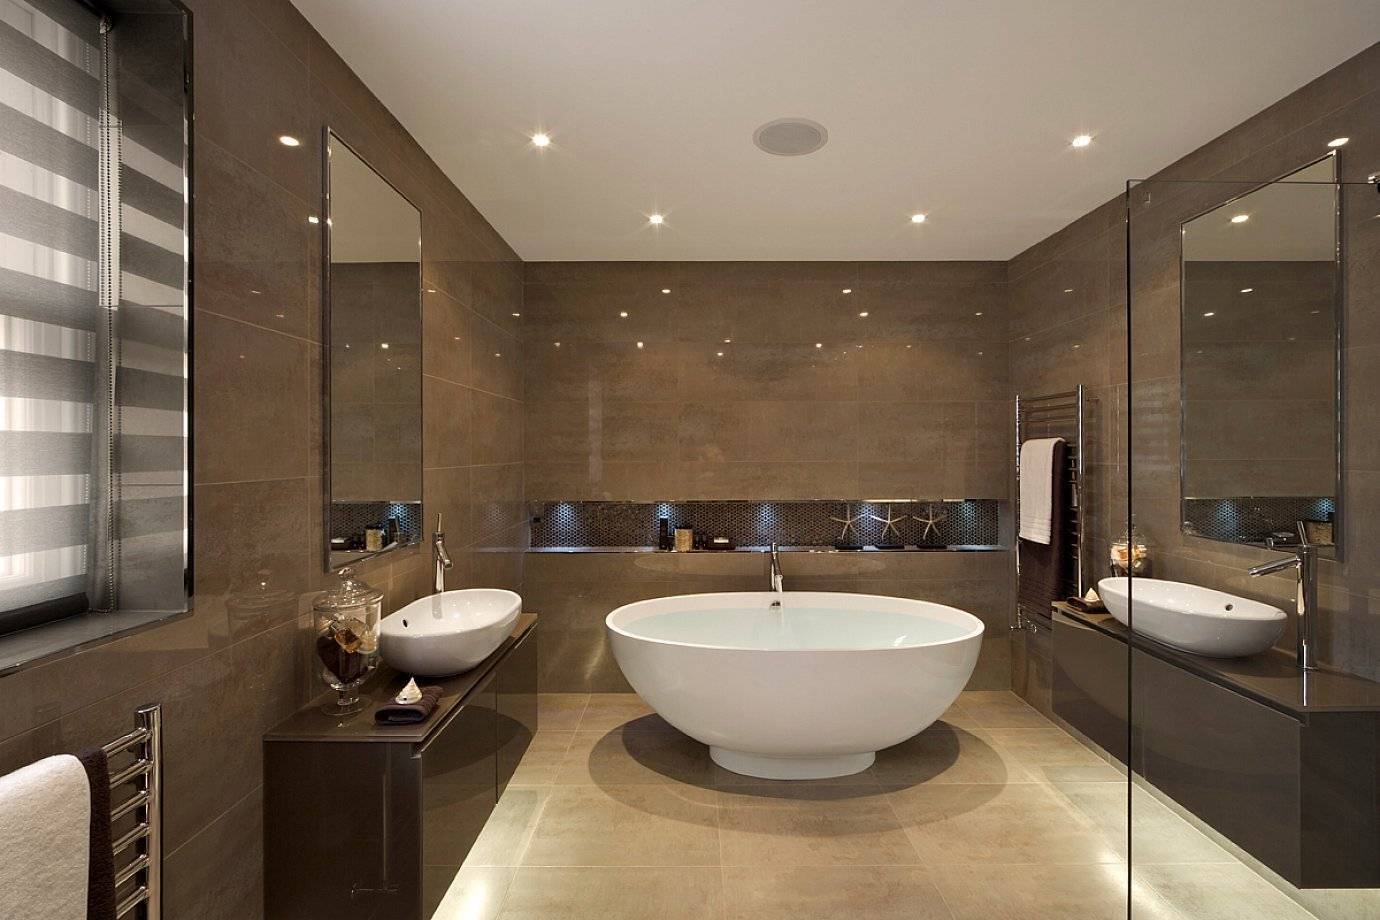 Дизайн ванной комнаты 9-10 кв. м